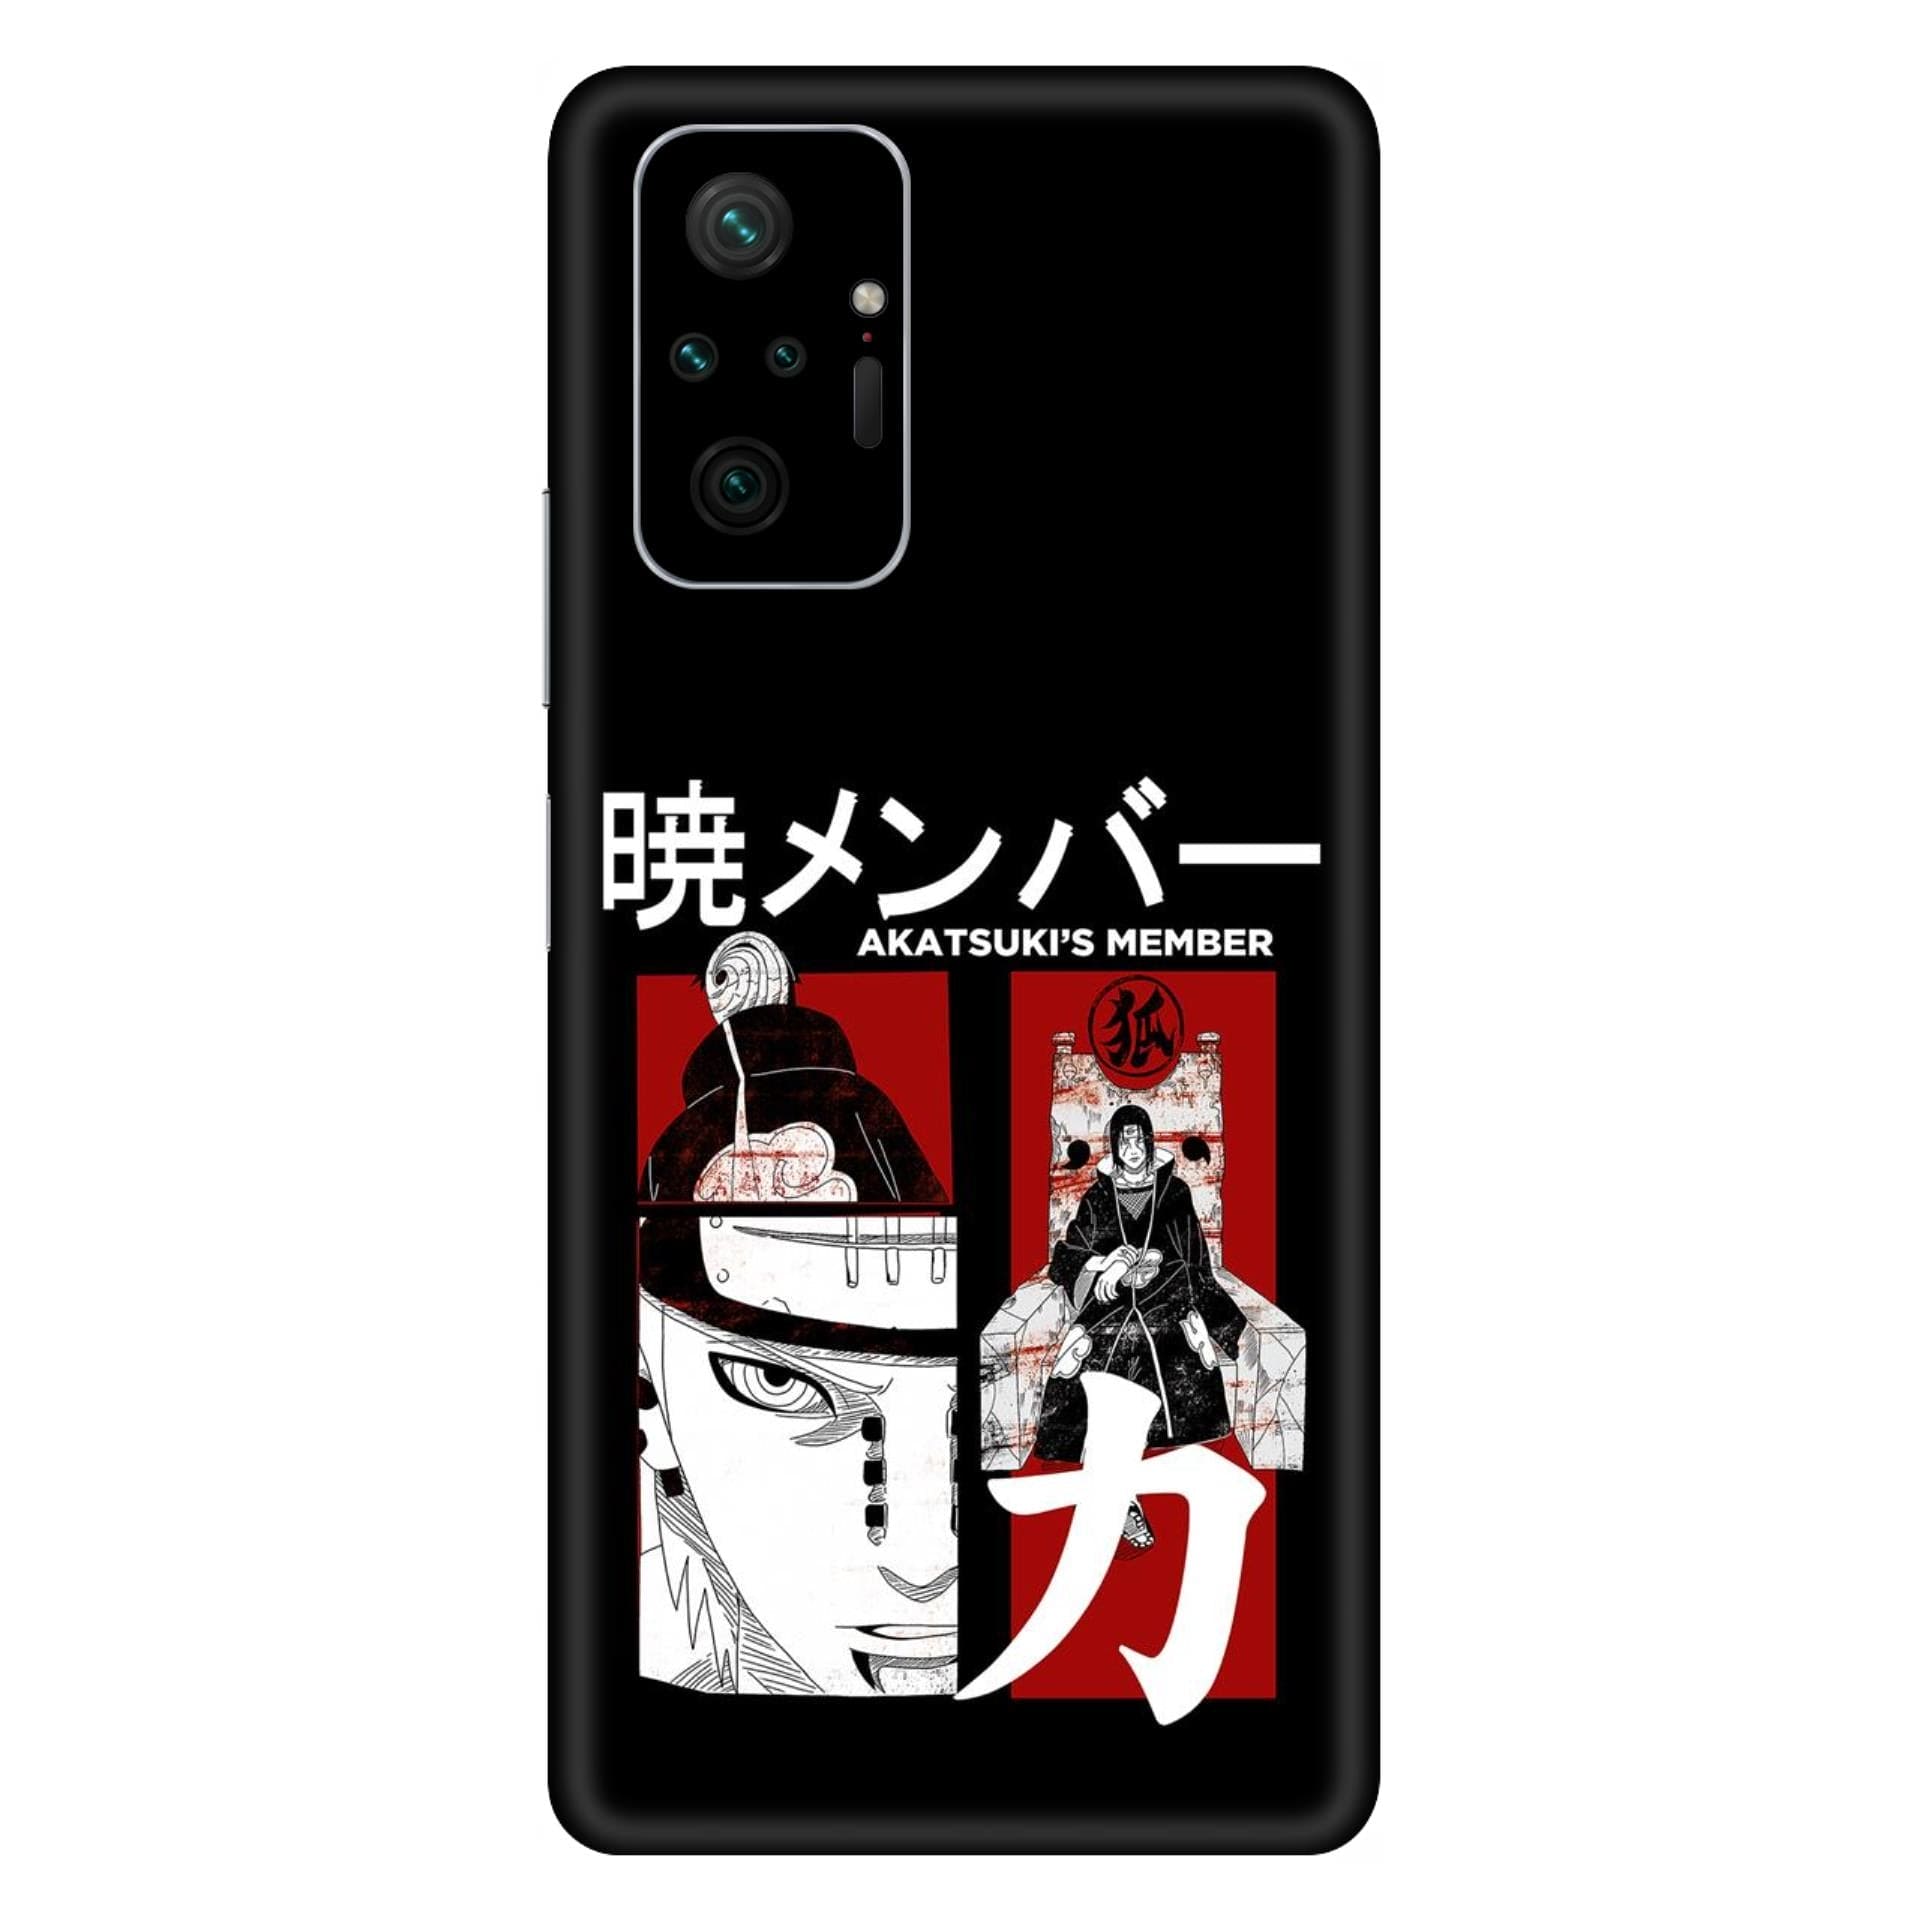 Redmi Note 10 Pro Max Akatsuki member skins